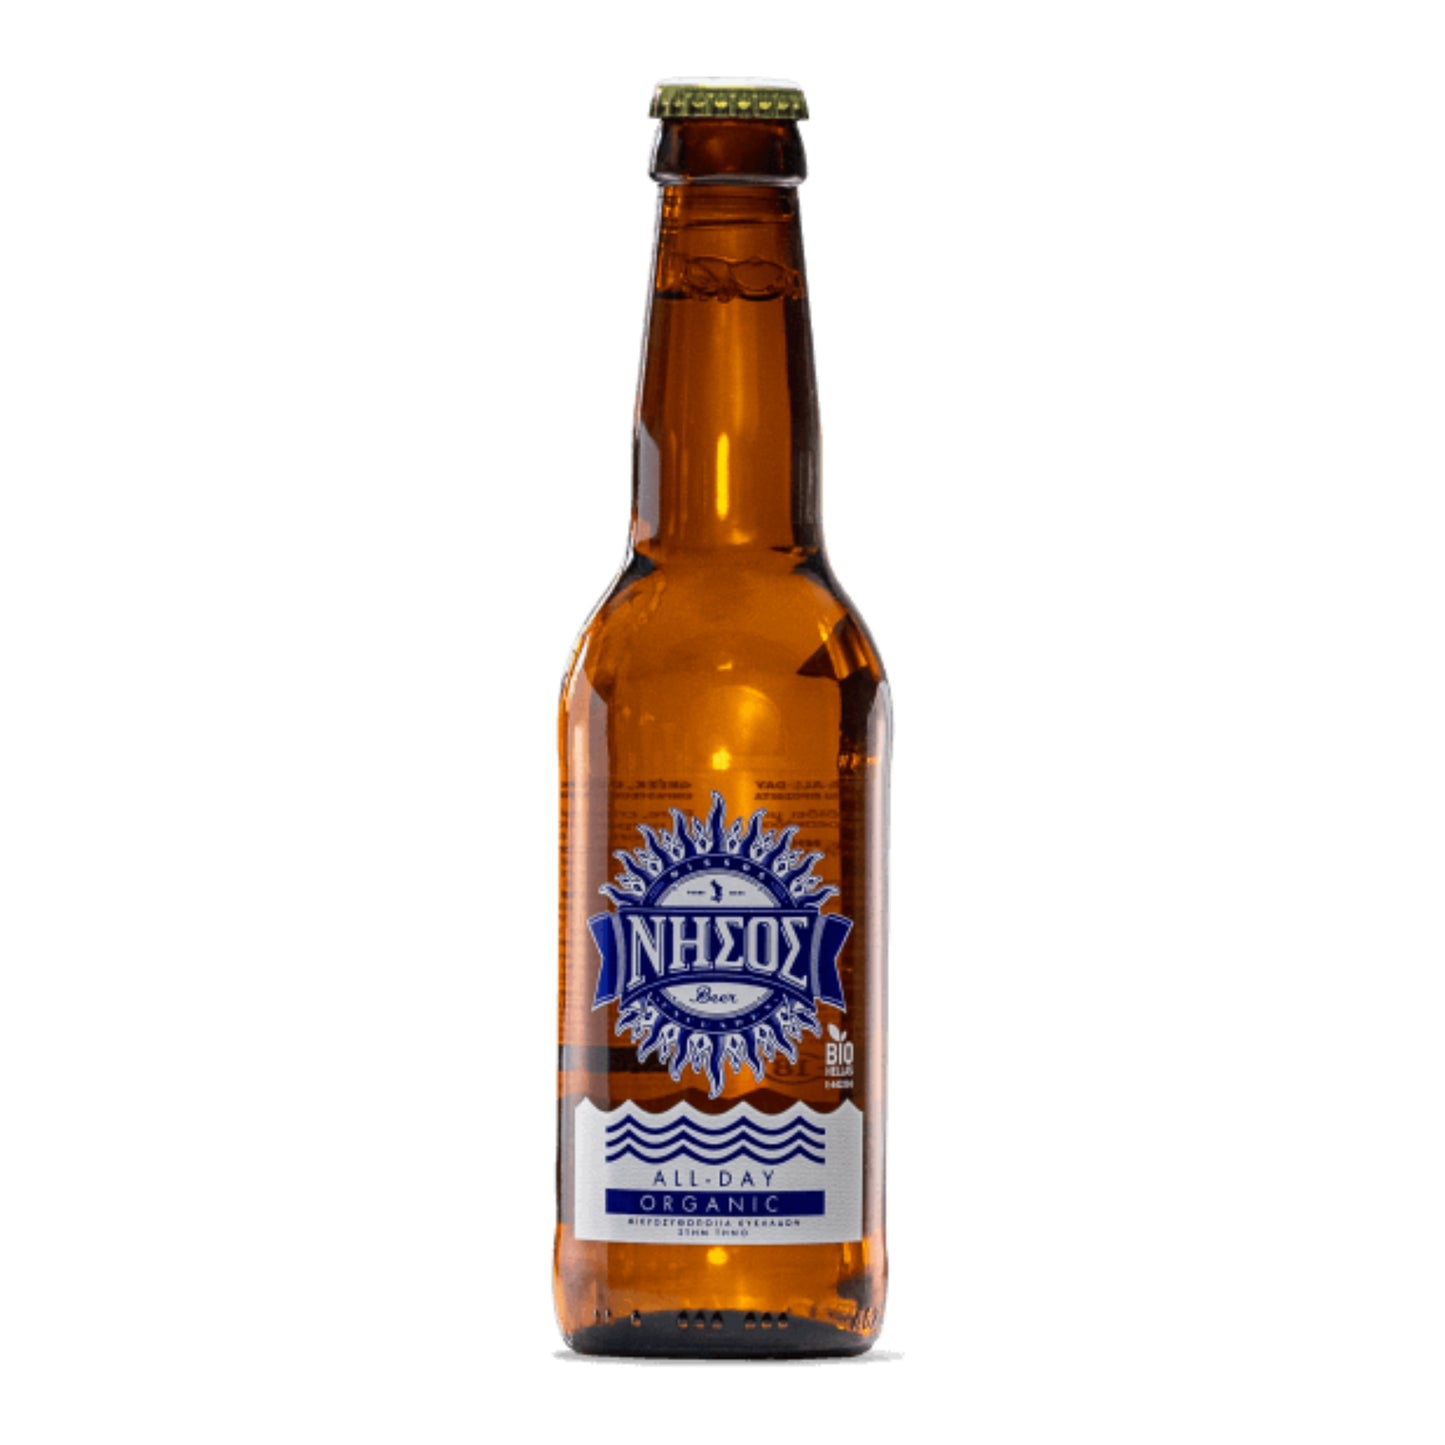 Organic beer Nissos All Day - 330ml